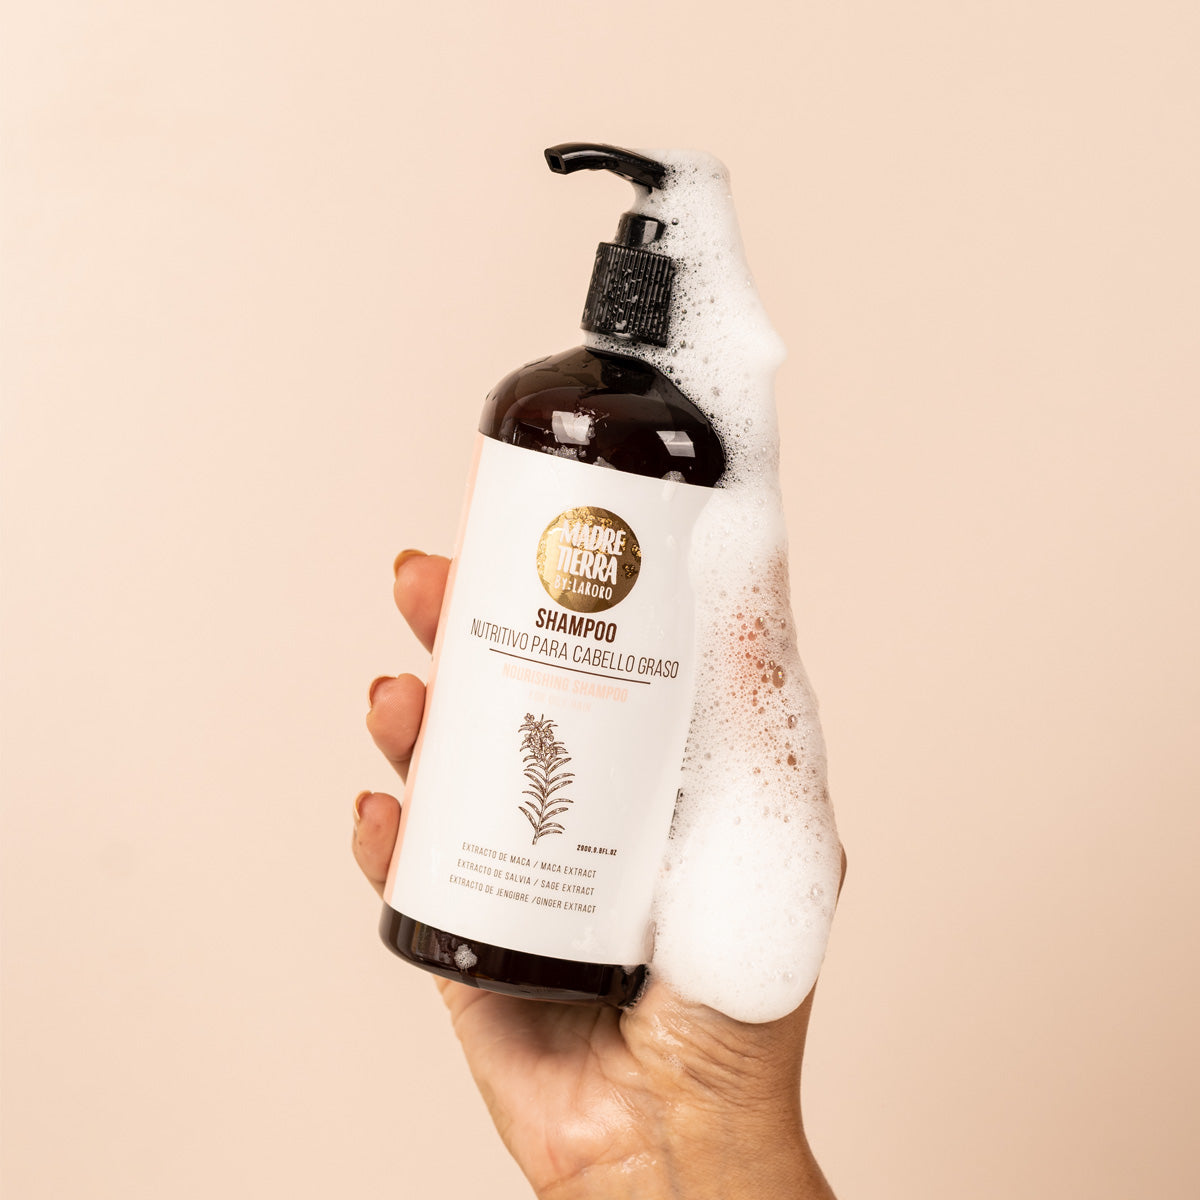 Shampoo Nutritivo Graso - Madre Tierra Oficial